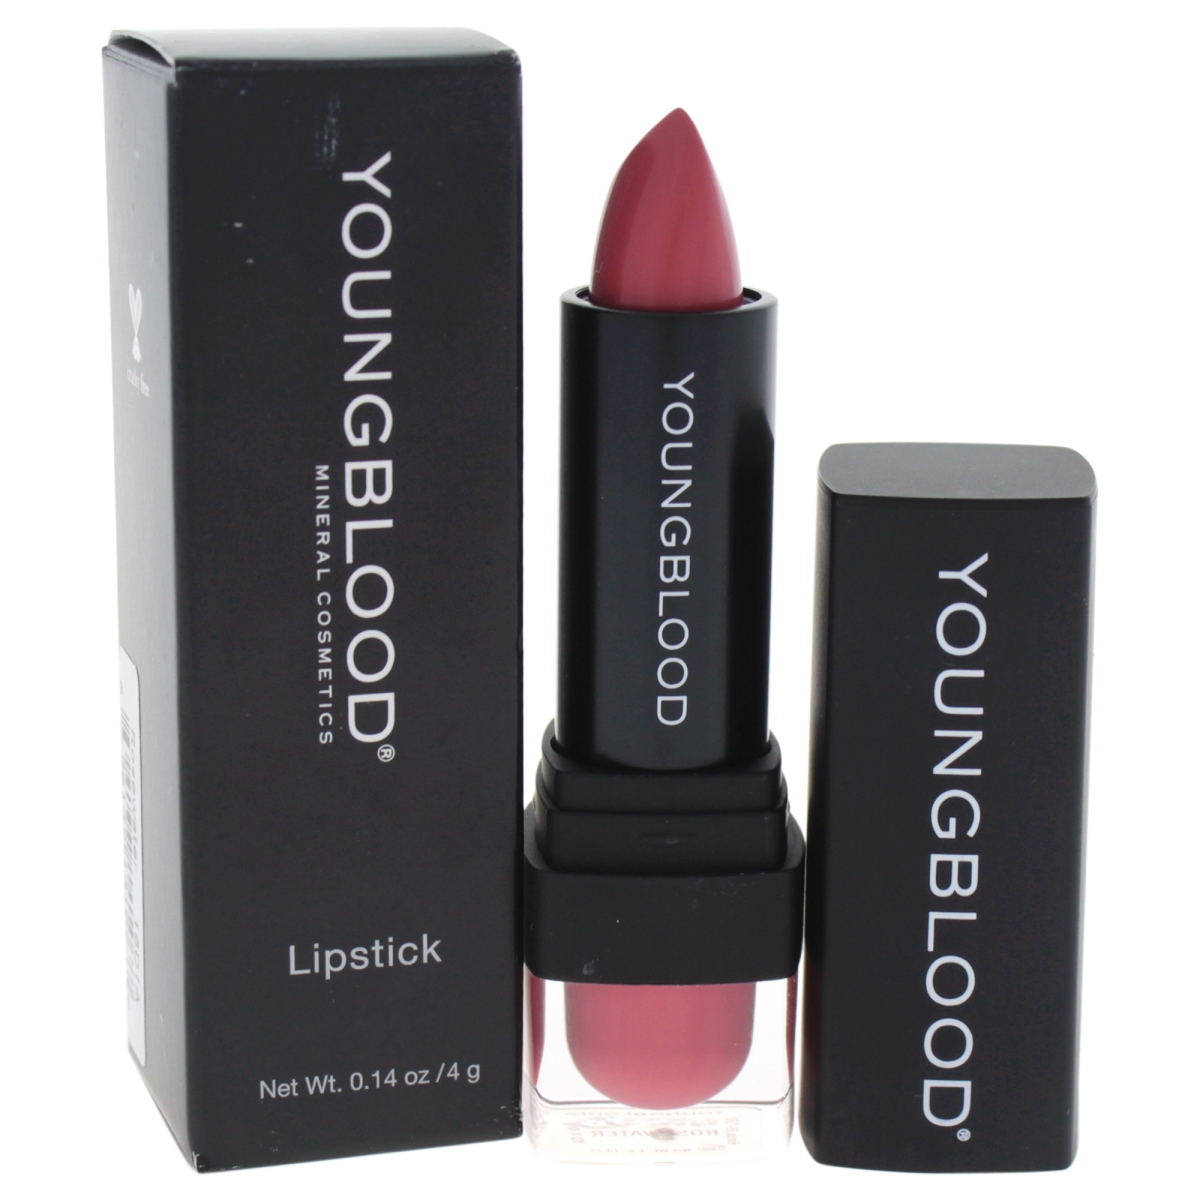 W-c-12006 Lipstick - Rosewater For Women - 0.14 Oz